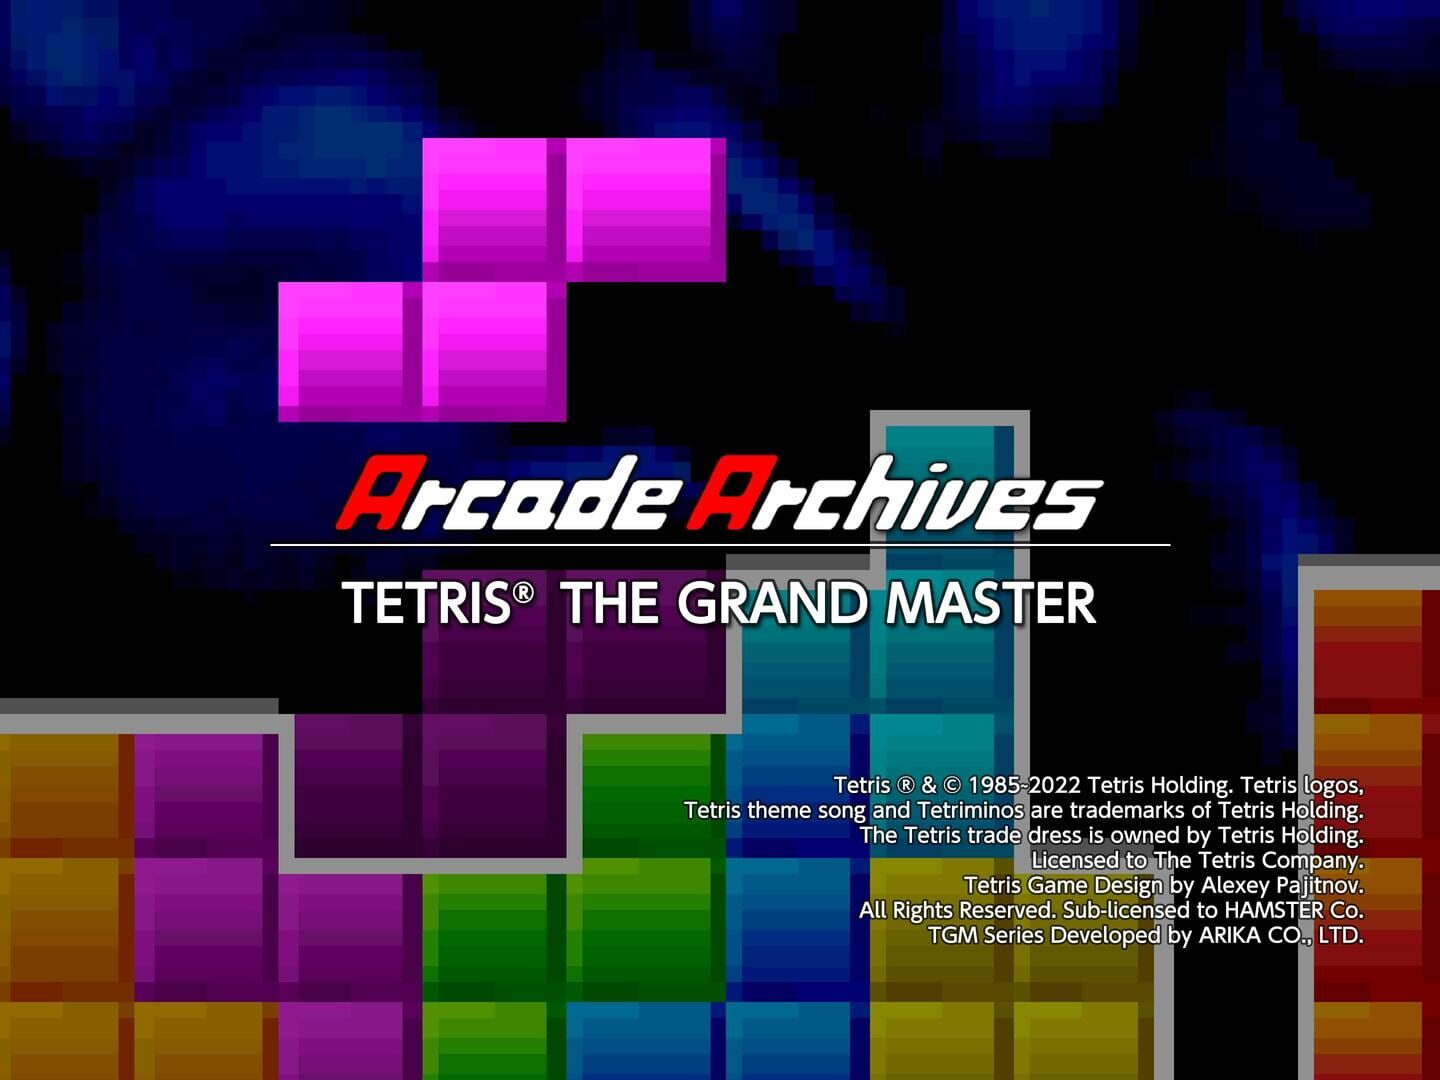 Arte - Arcade Archives: Tetris the Grand Master